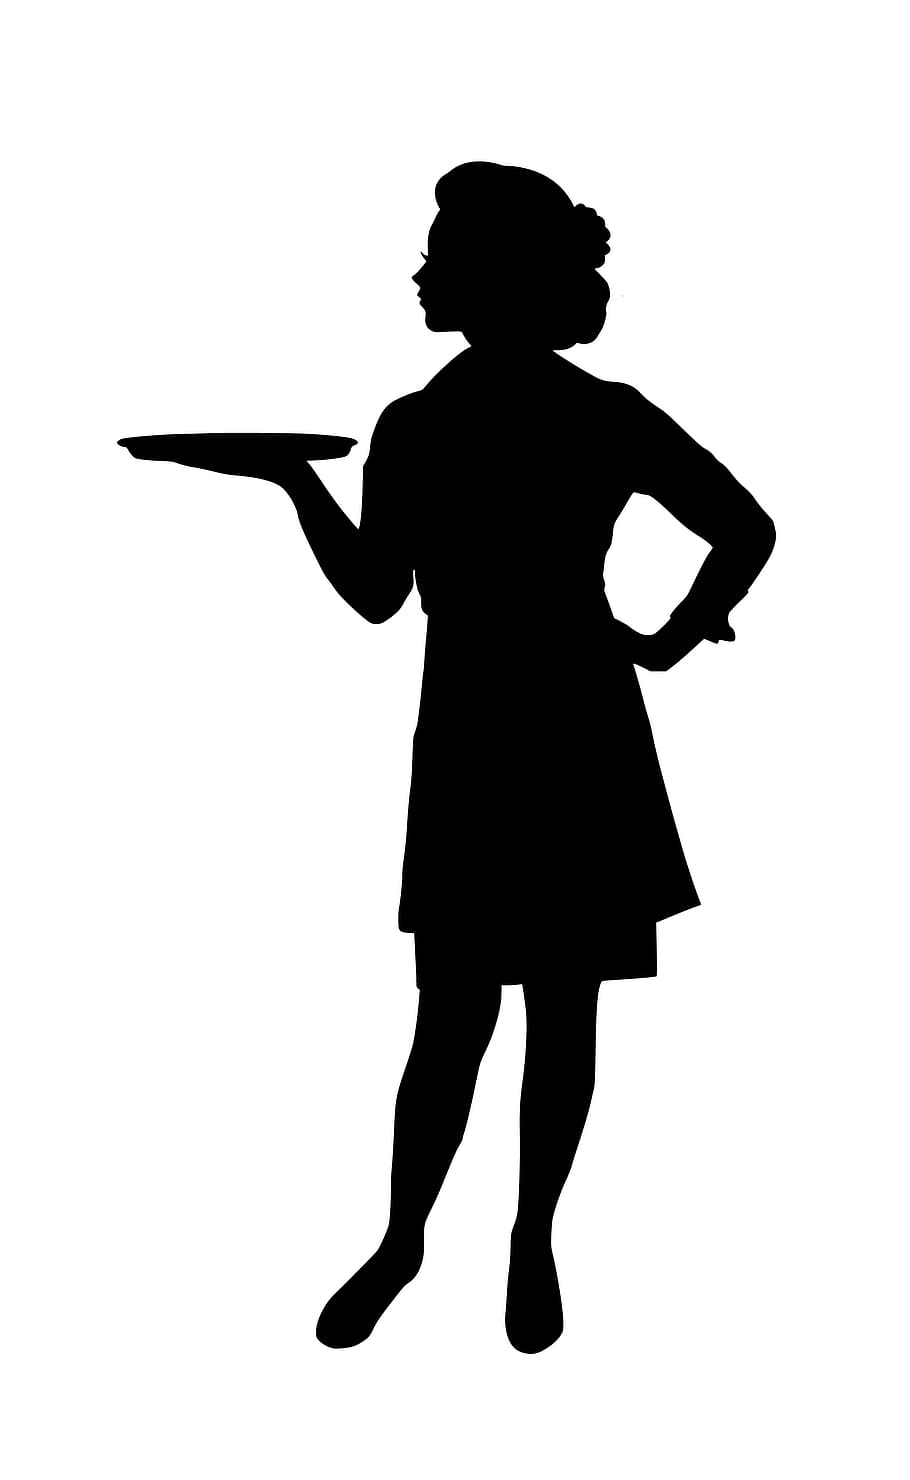 mujer camarera, silueta, camarera, camarero, sirviendo, uniforme, servicio, transporte, empleado, hembra